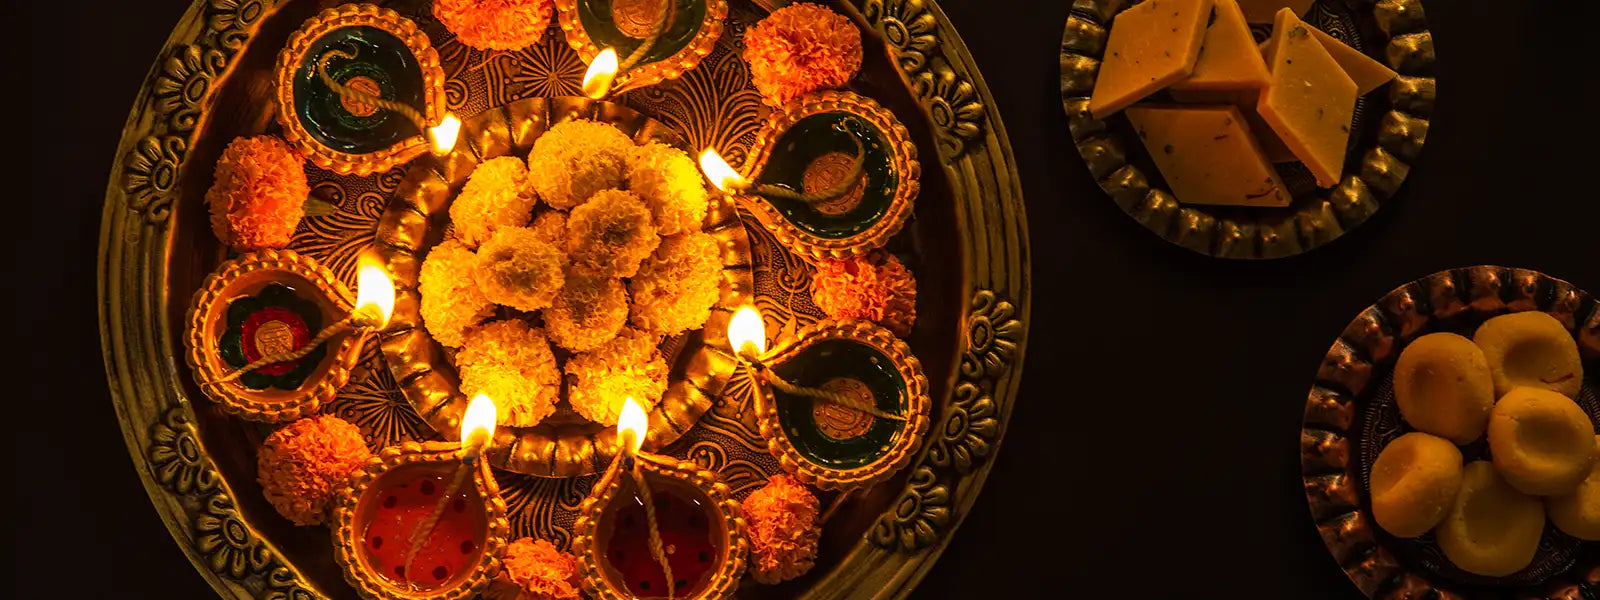 Versatile Utensils for Diwali Purchase & Gifting